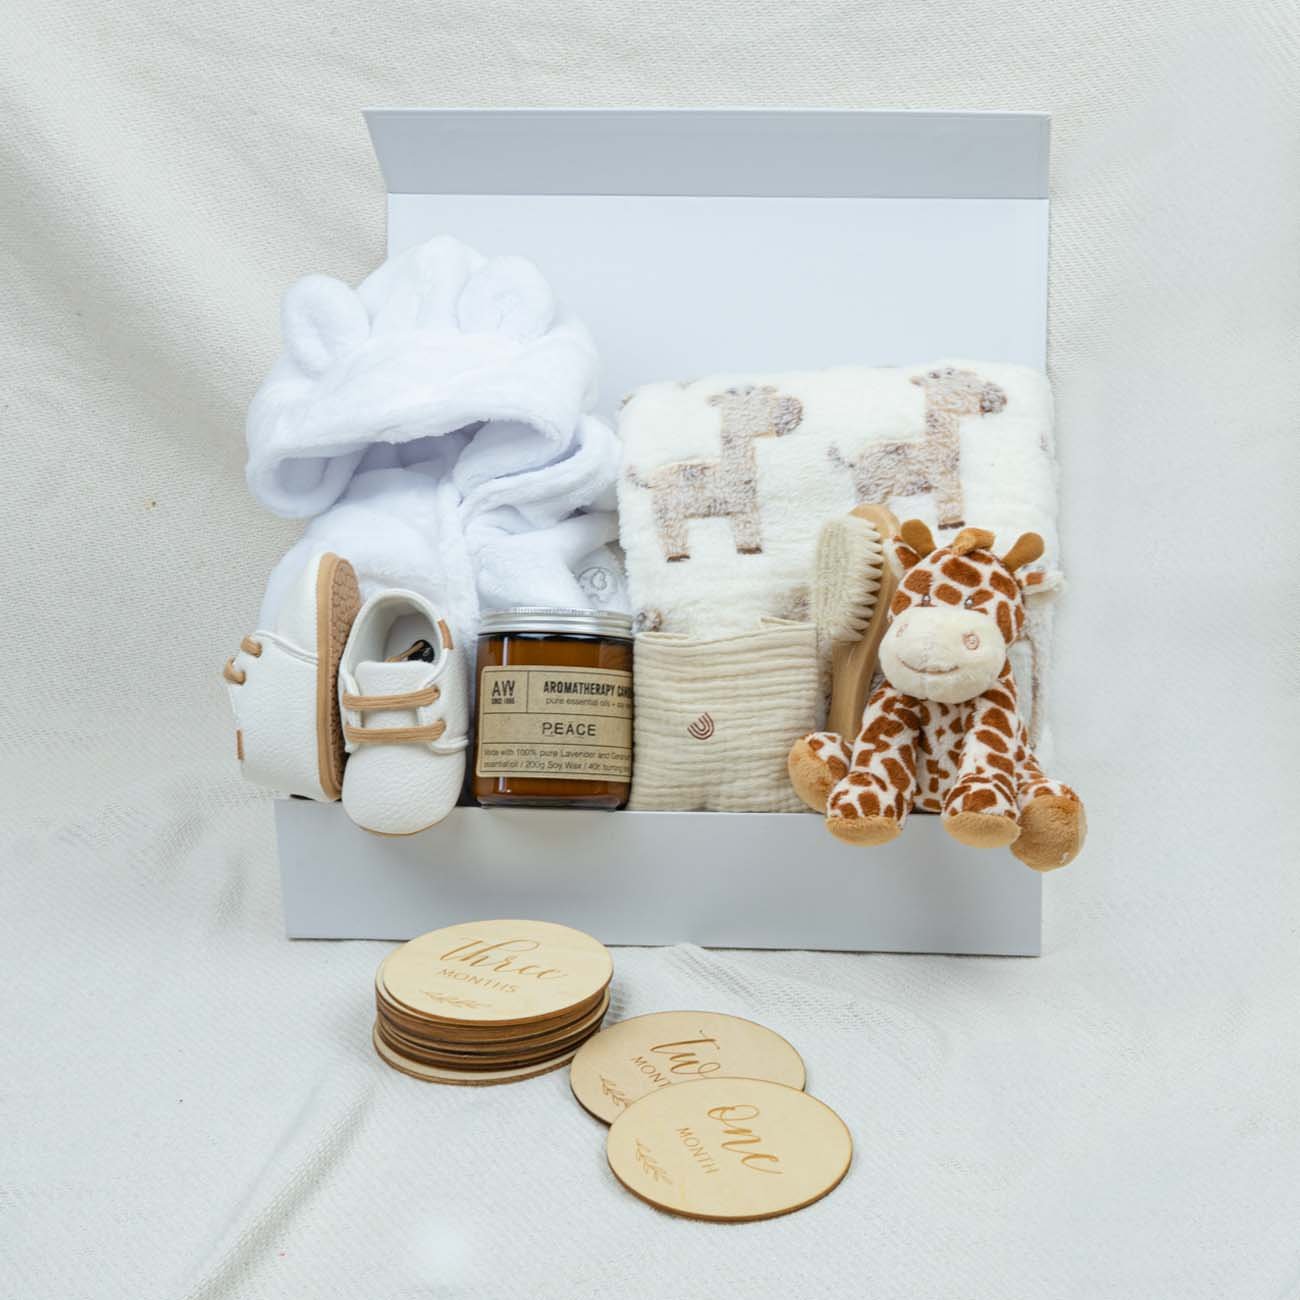 Snuggle Up Baby Gift Set - Giraffe Themed & Eco Friendly